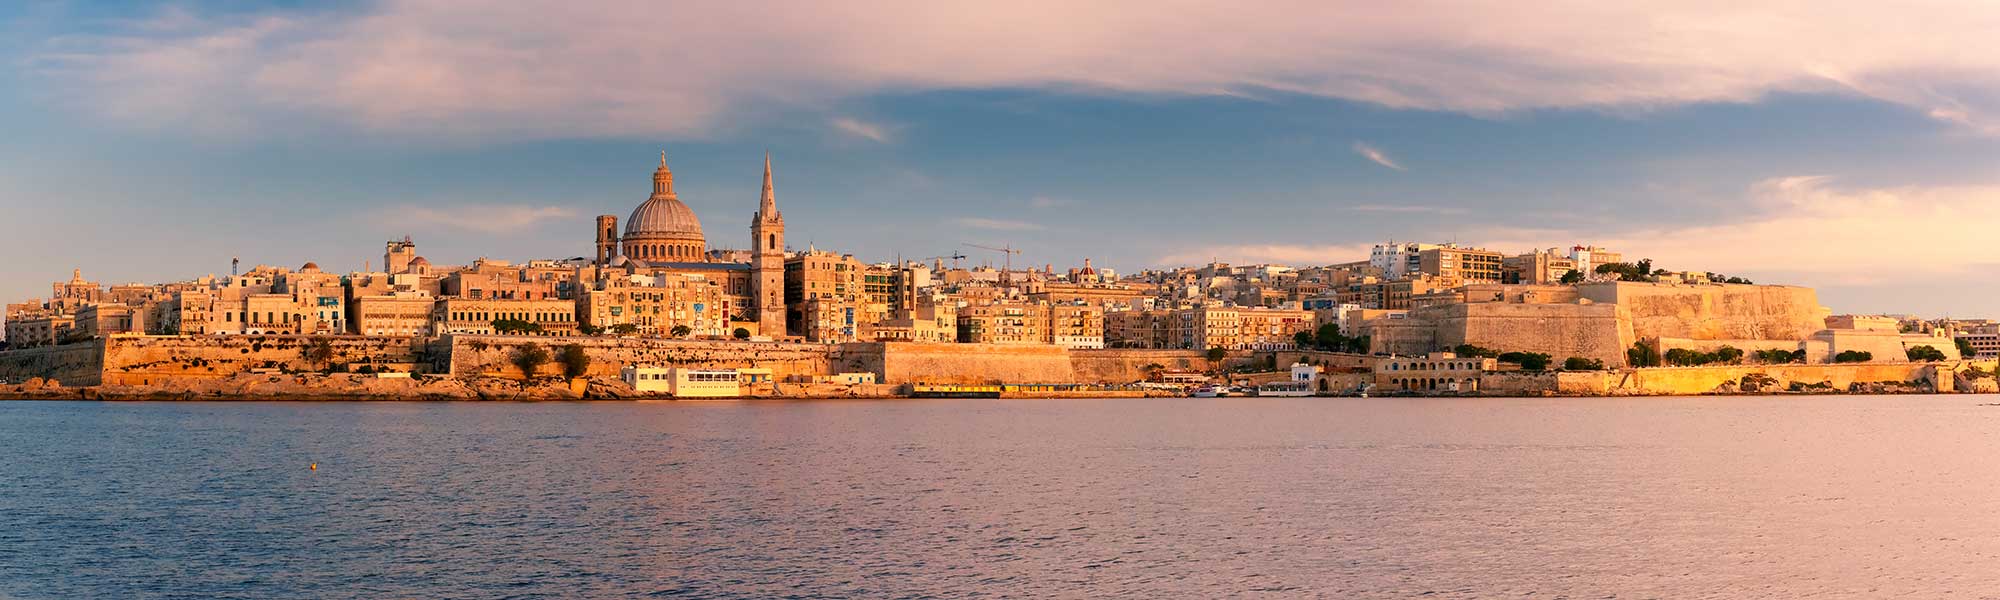 Valletta, Malta port landscape